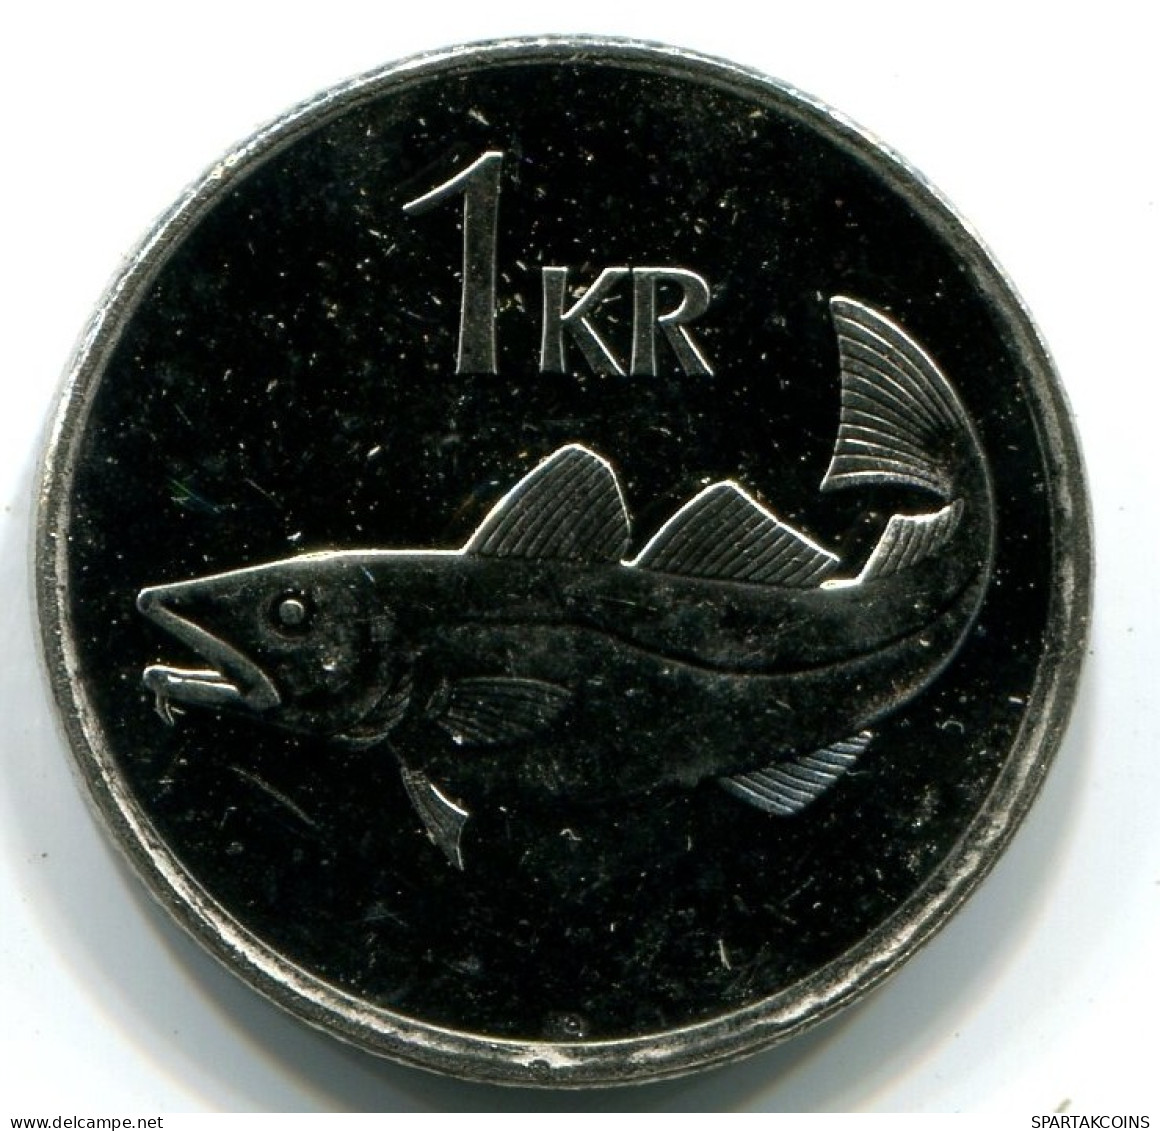 1 KRONA 1999 ICELAND UNC Fish Coin #W11223.U.A - IJsland